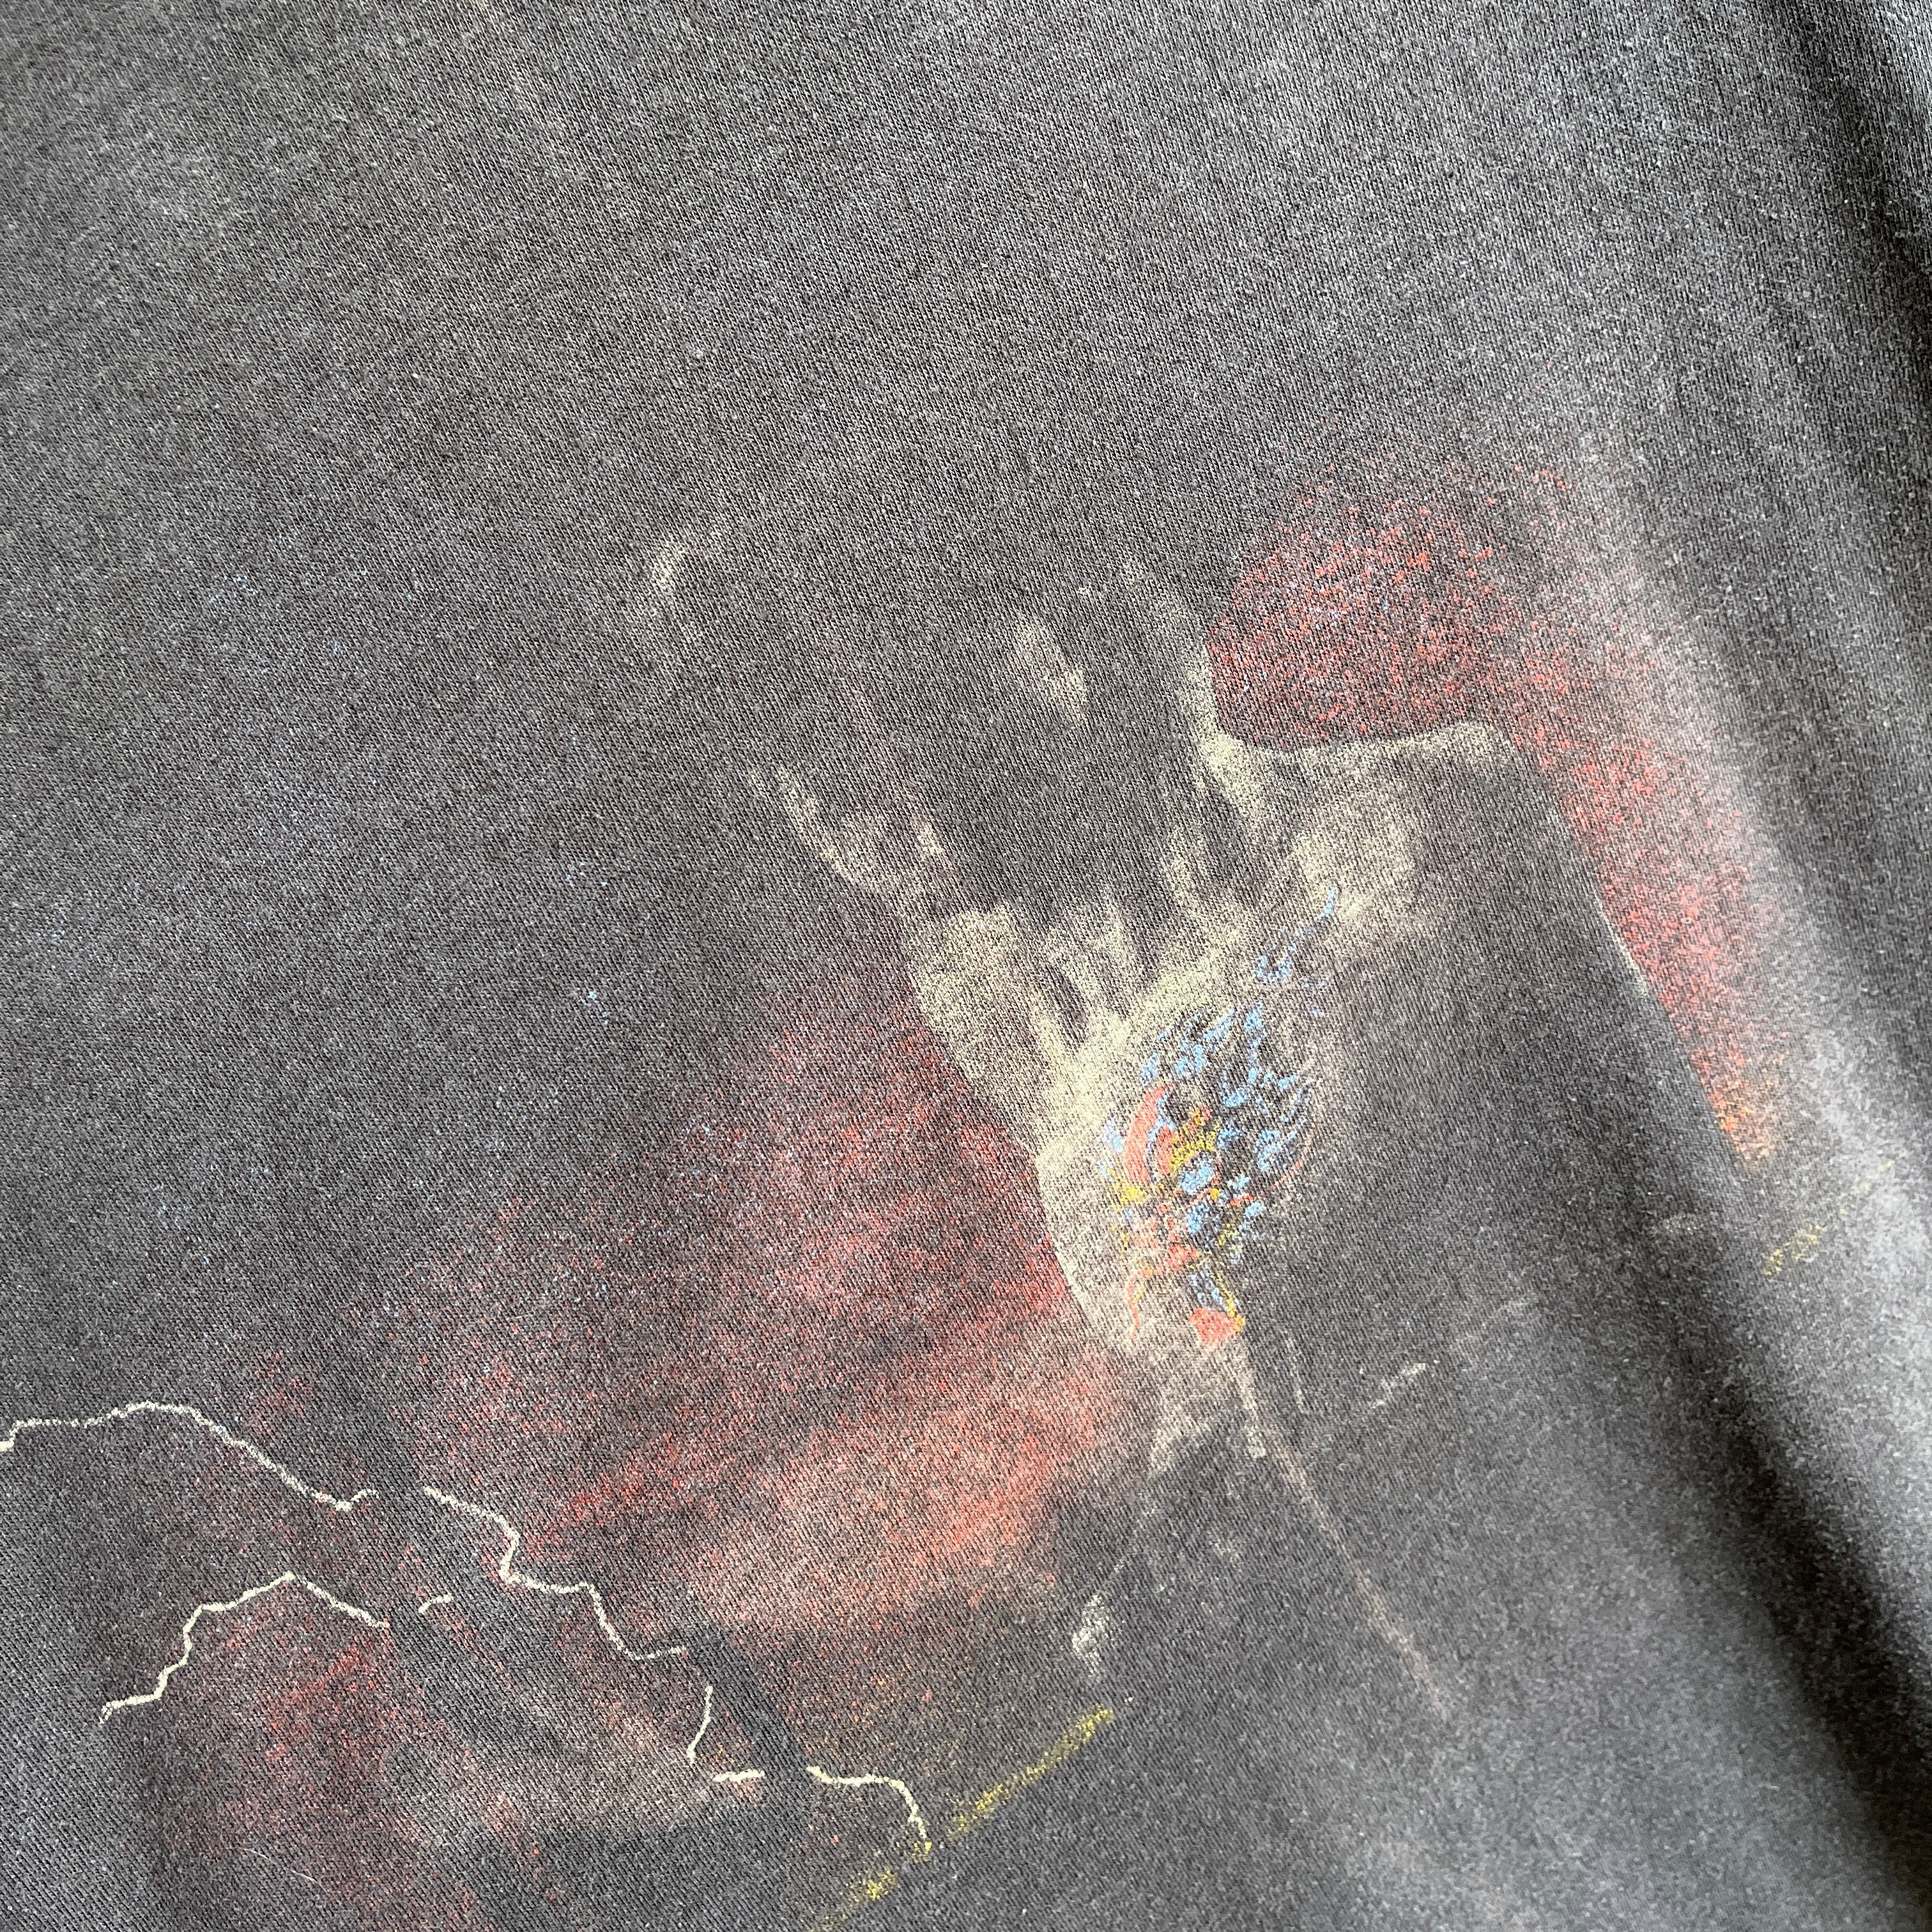 1988 Johnny Winter Tour T-Shirt - Legit!